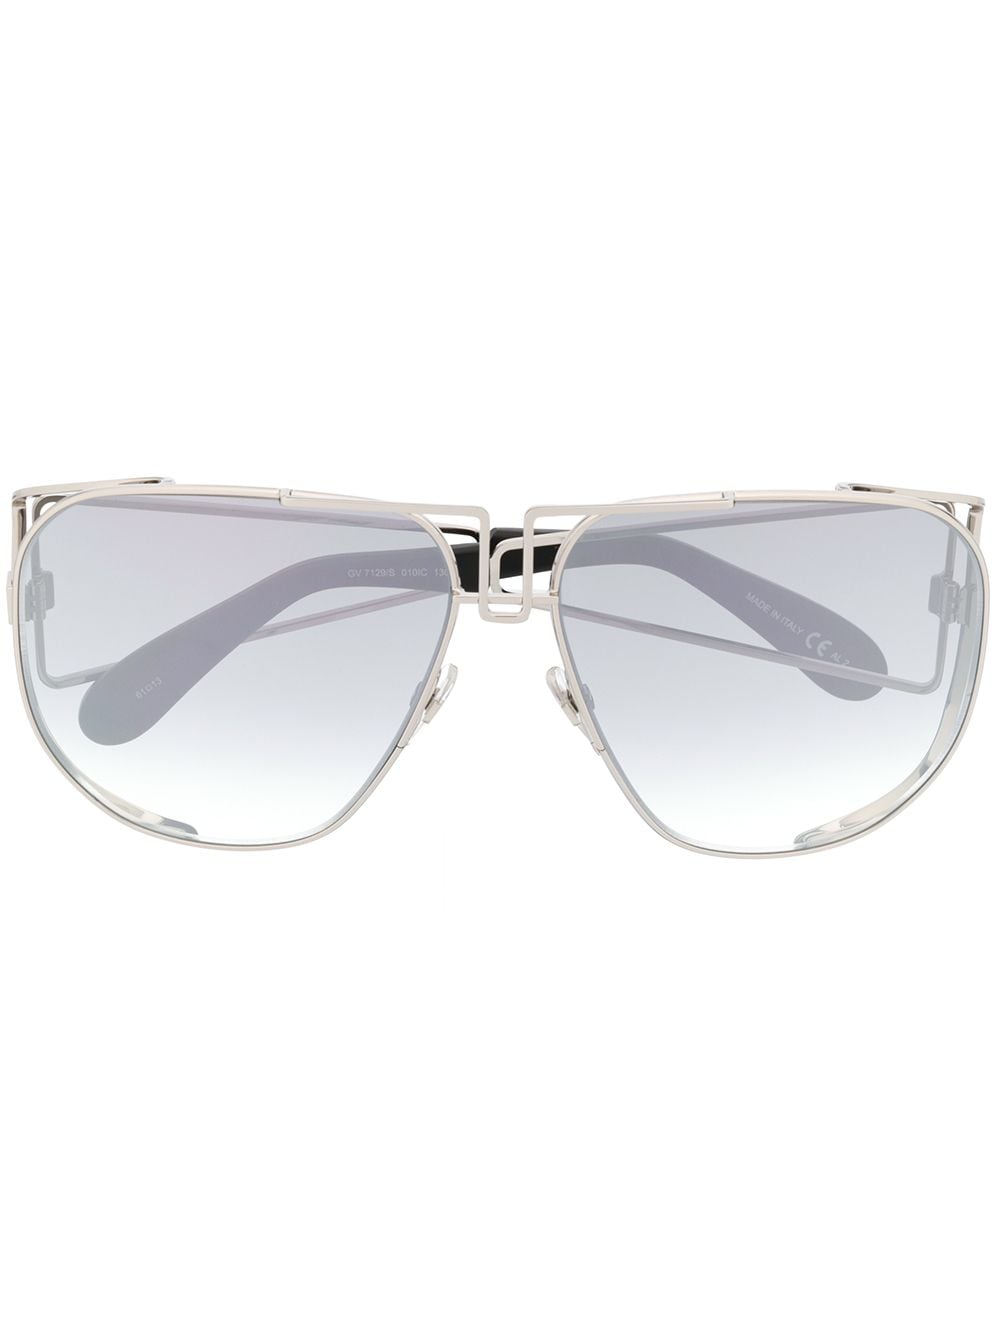 фото Givenchy Eyewear солнцезащитные очки GV 7129/S